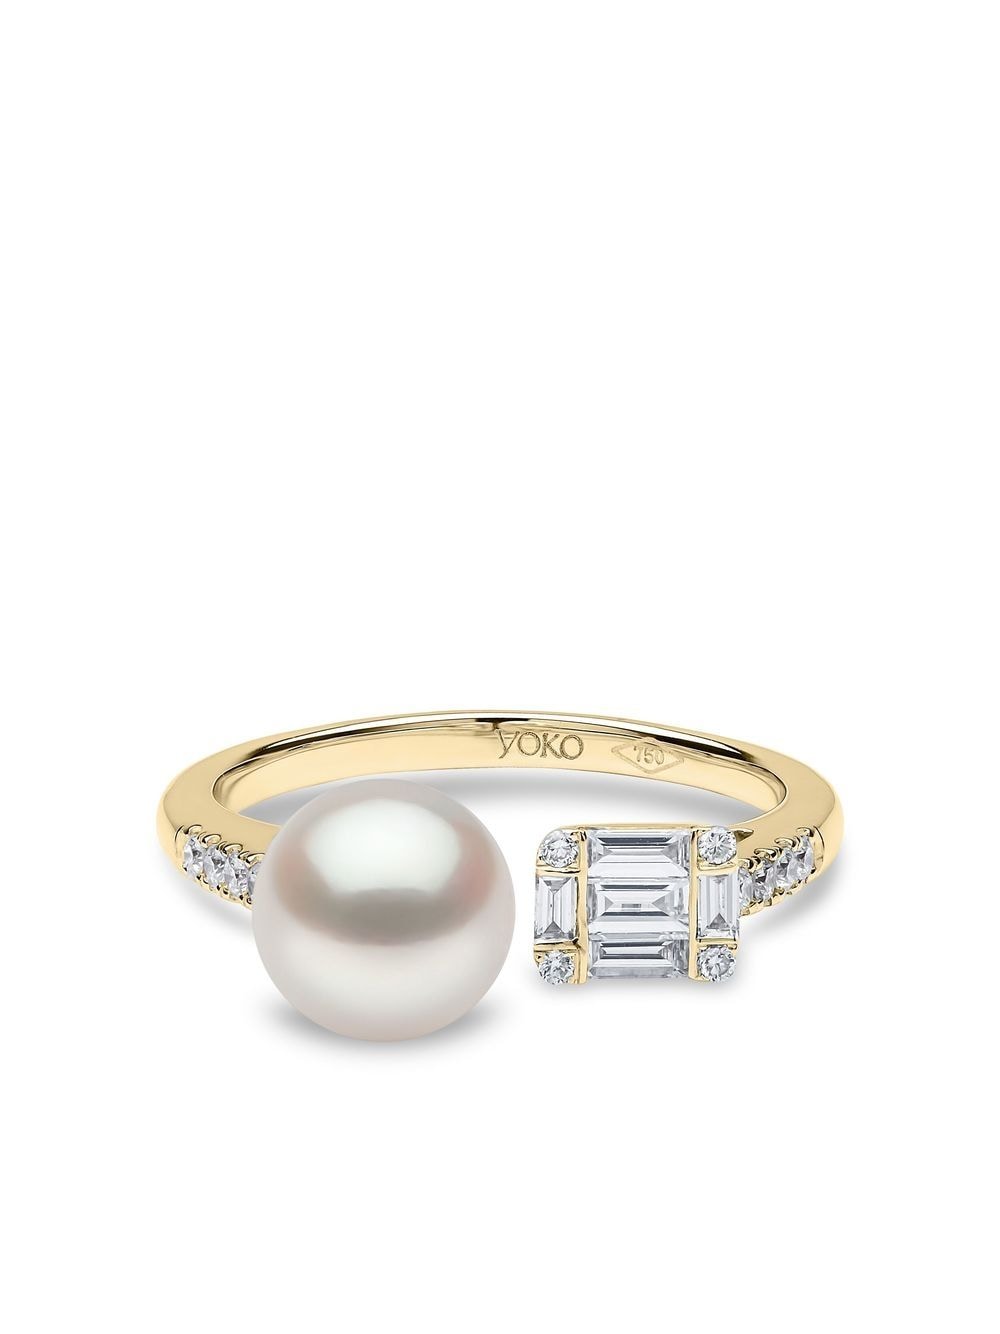 Yoko London 18kt yellow gold Starlight pearl and diamond ring von Yoko London